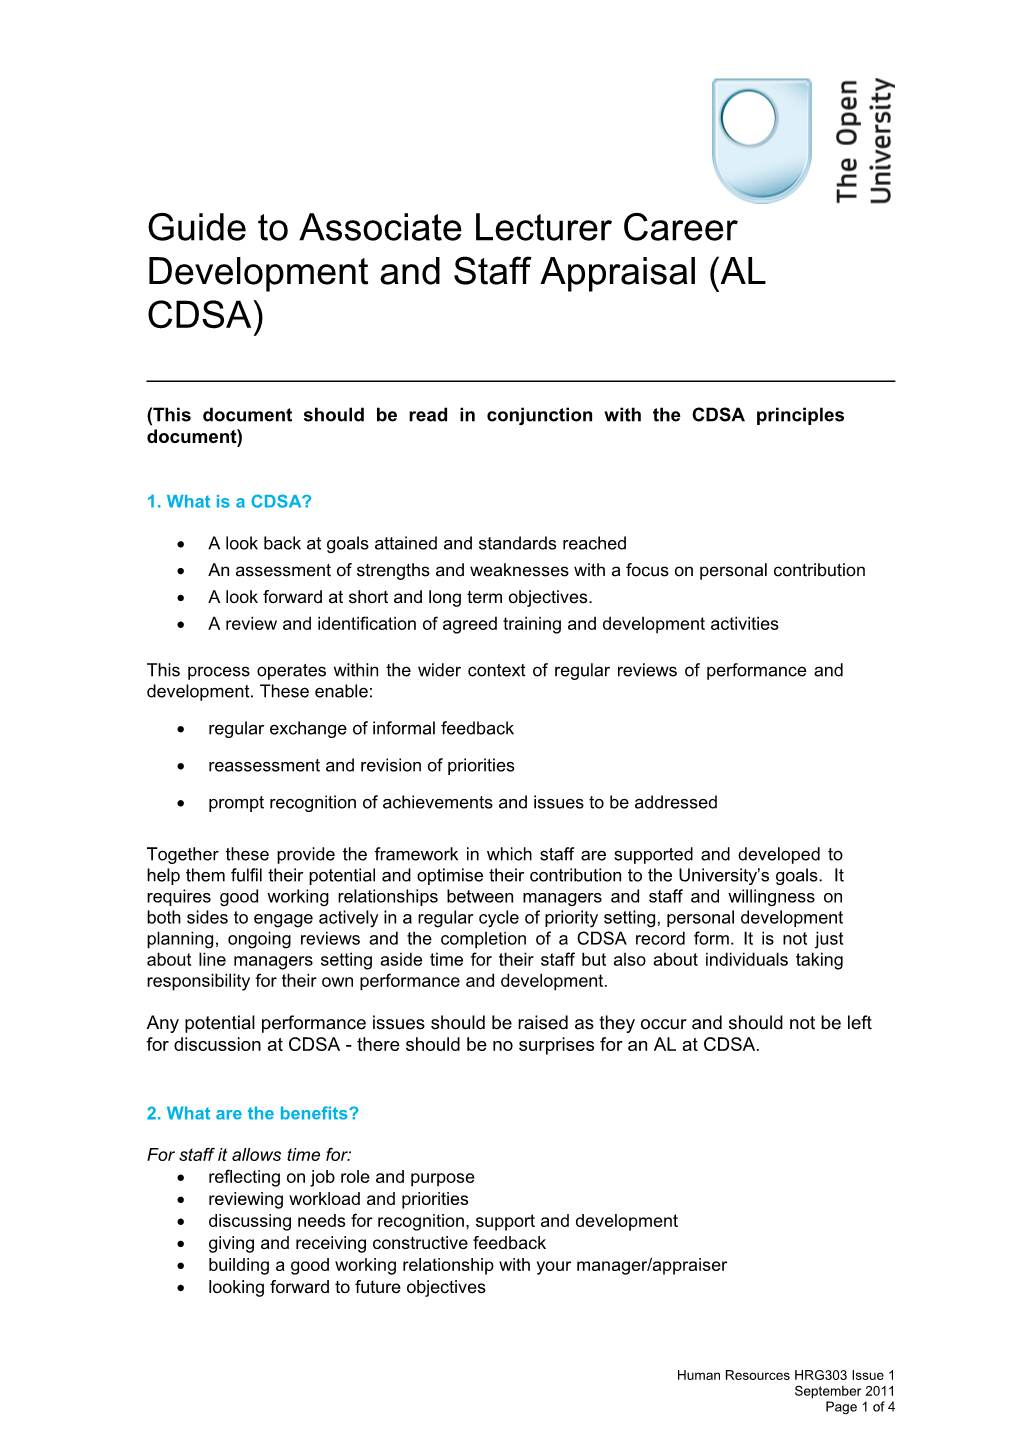 Guide To Associate Lecturer Career Development And Staff Appraisal (AL CDSA)